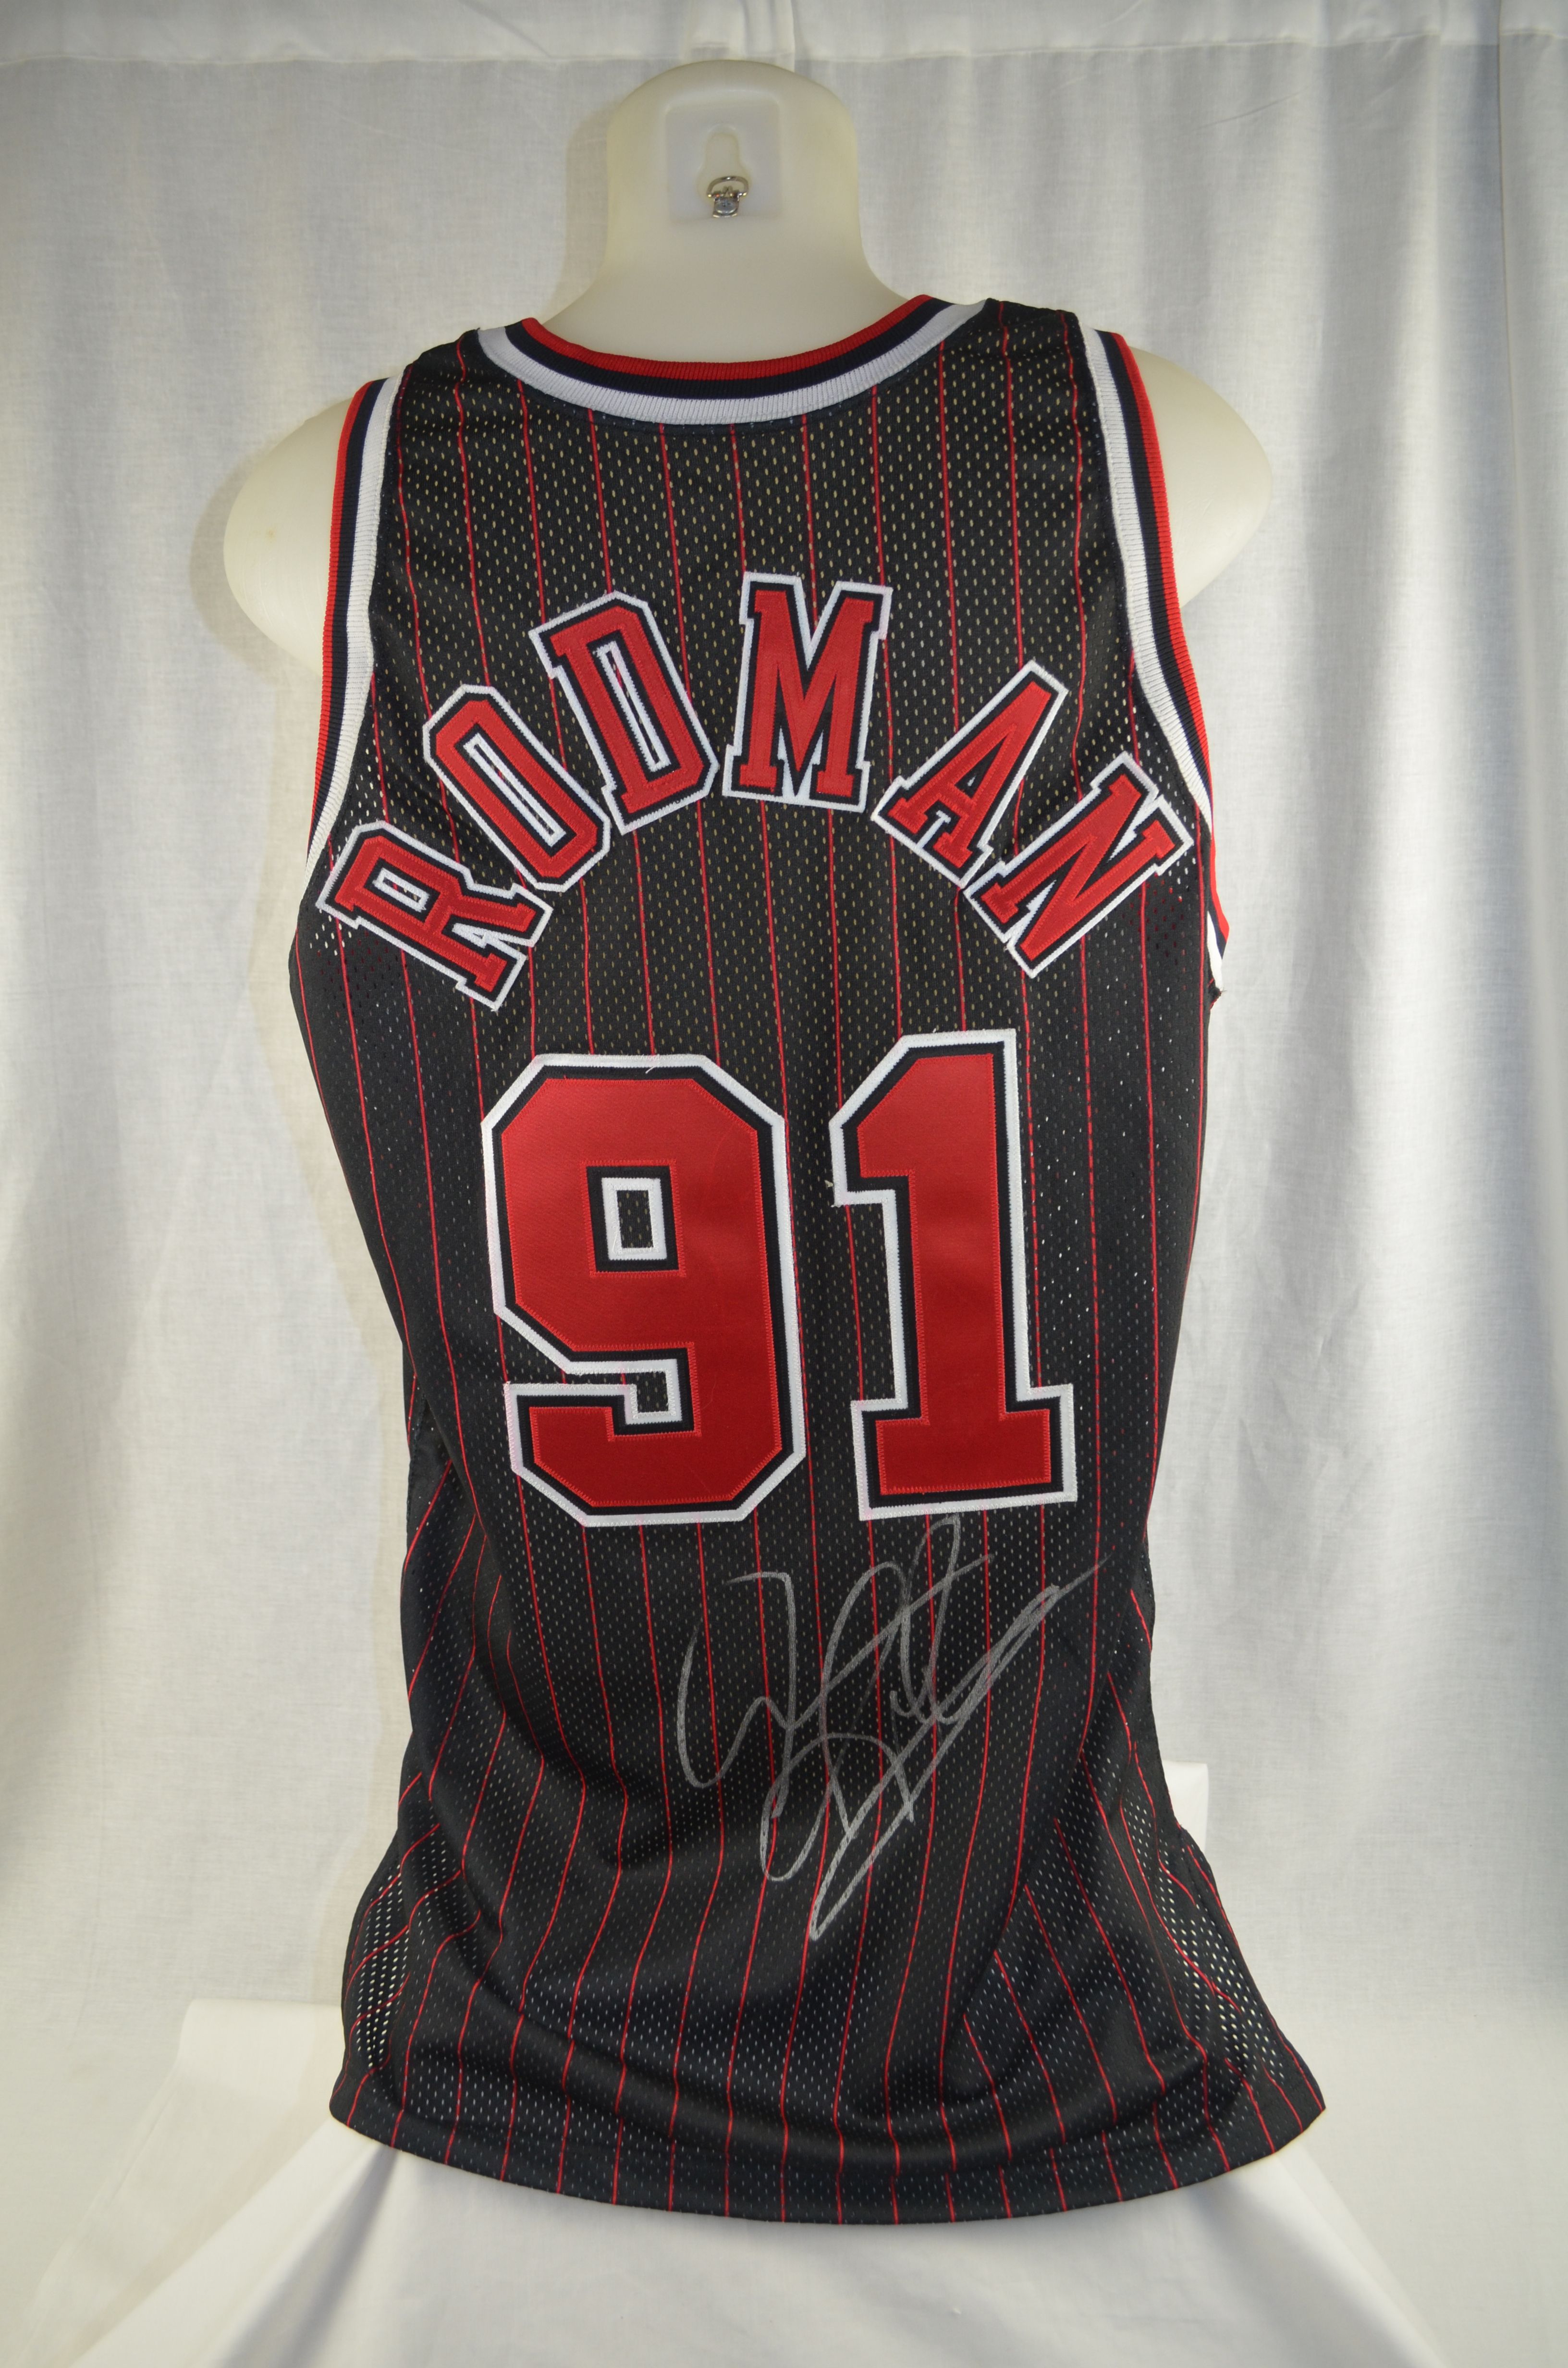 Sold at Auction: Dennis Rodman Jersey